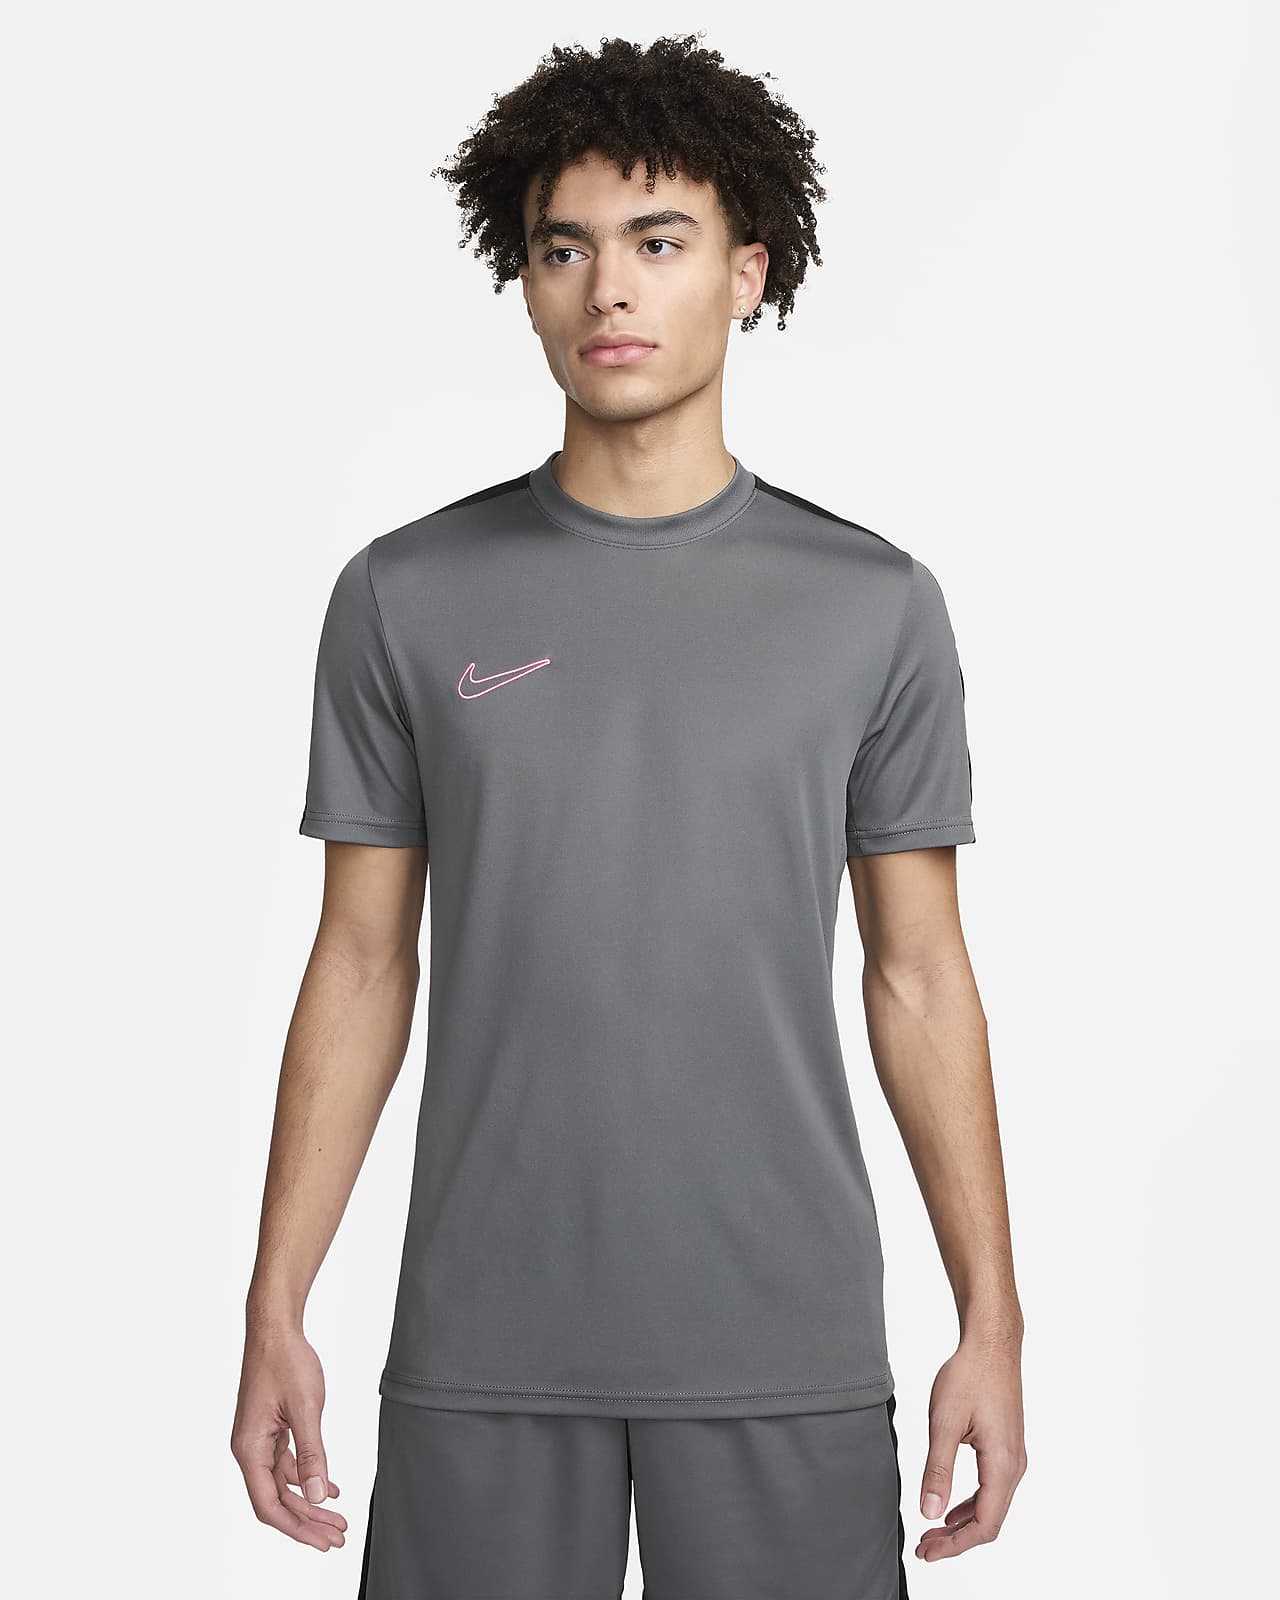 Nike Academy Dri-FIT rövid ujjú férfi futballfelső